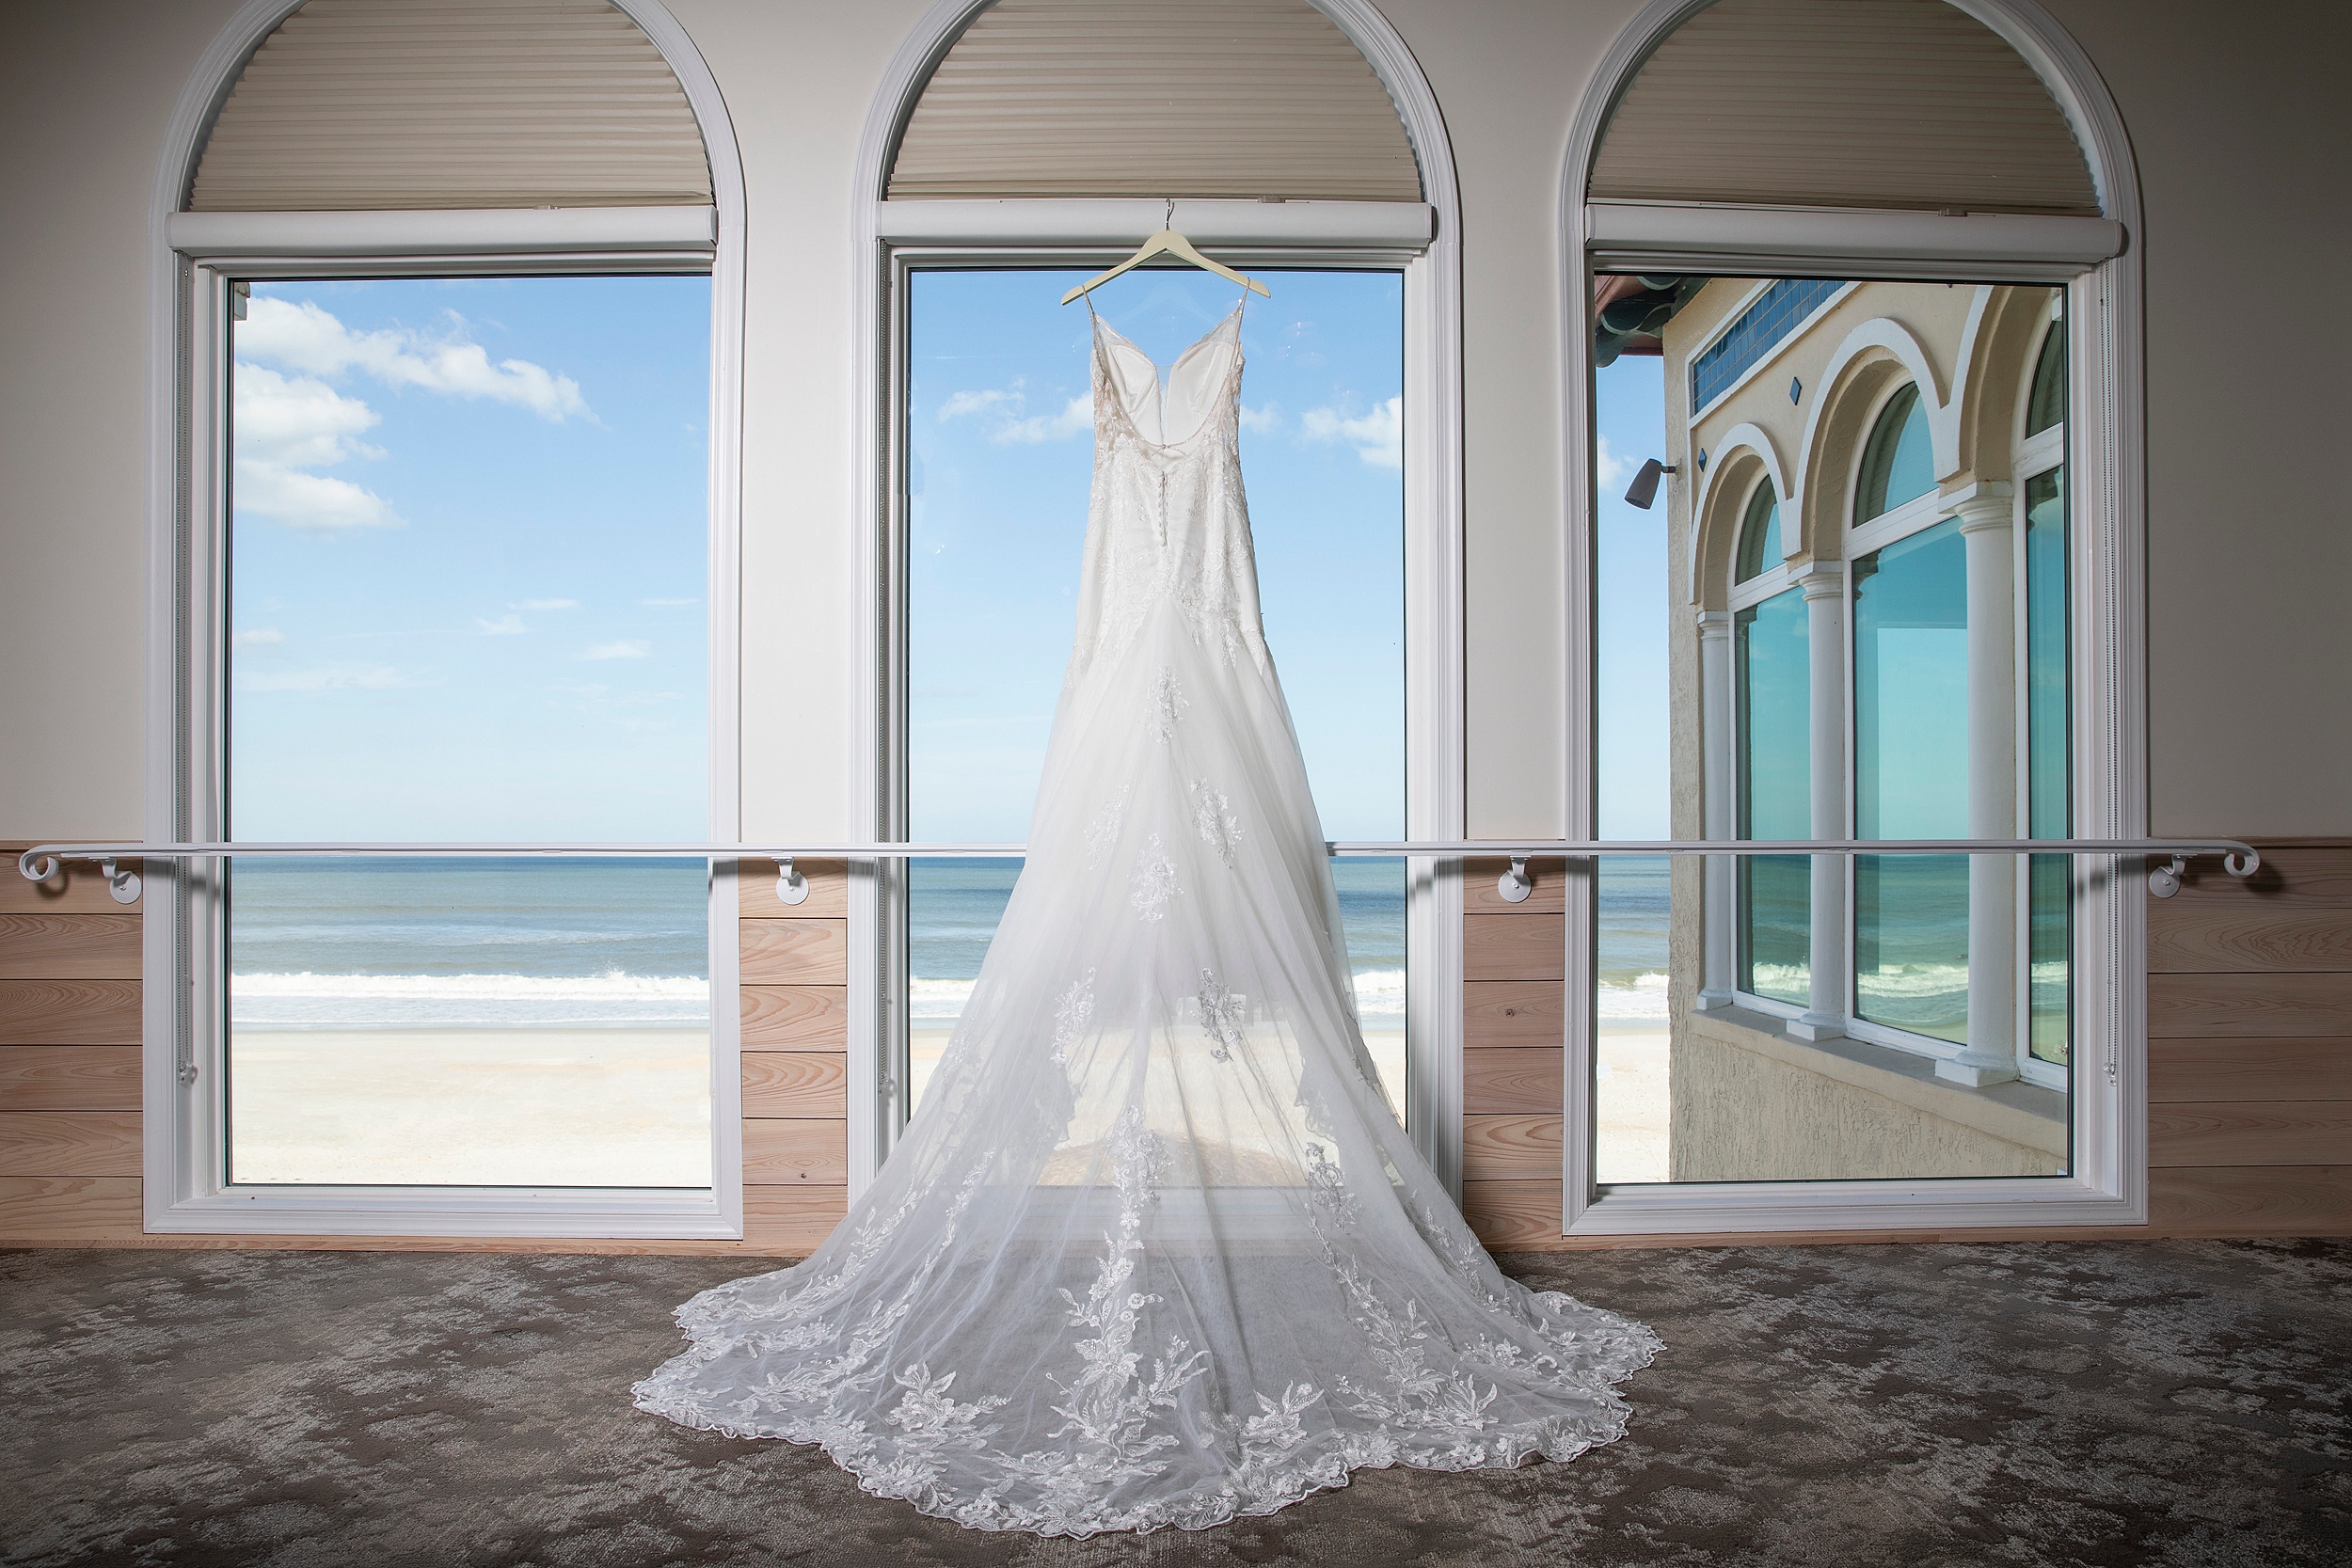 A wedding dress hangs in a window overlooking a beach